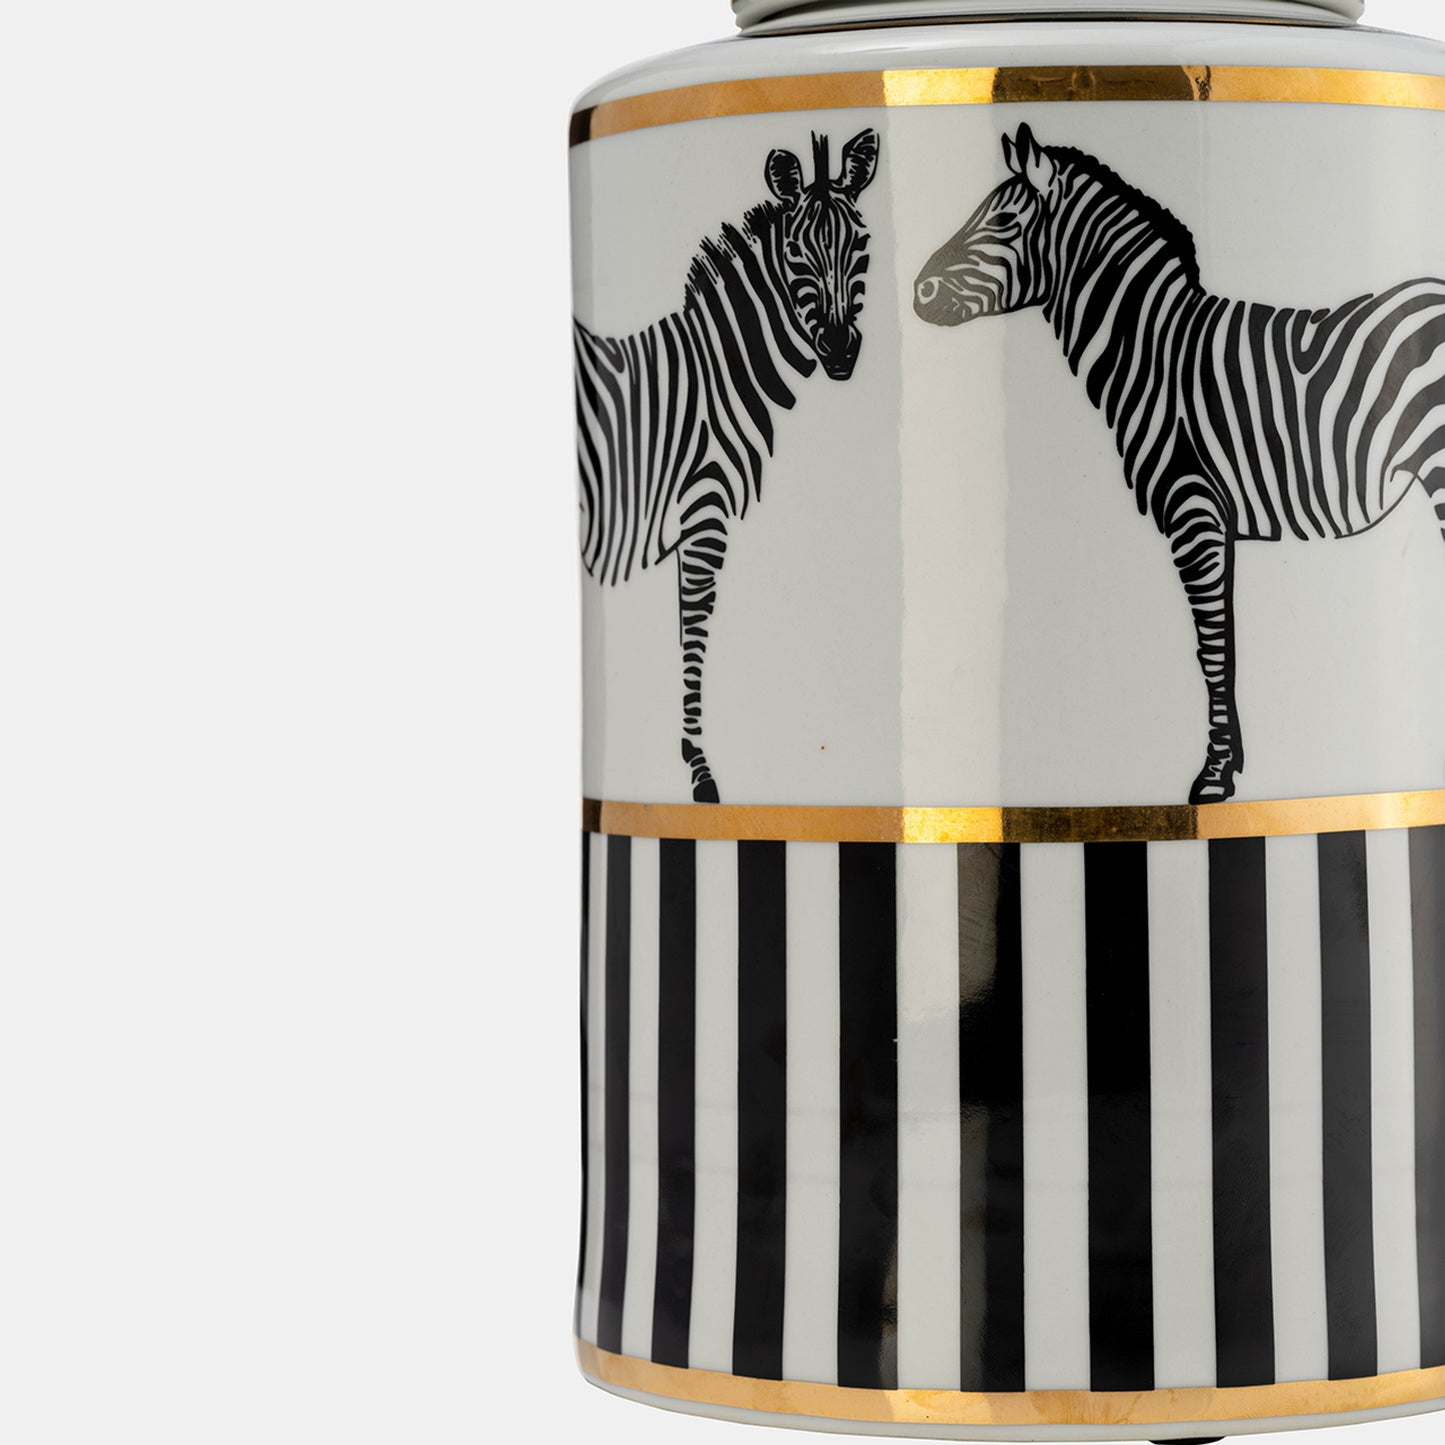 12"h Ceramic Zebra Jar W/ Lid, White/gold